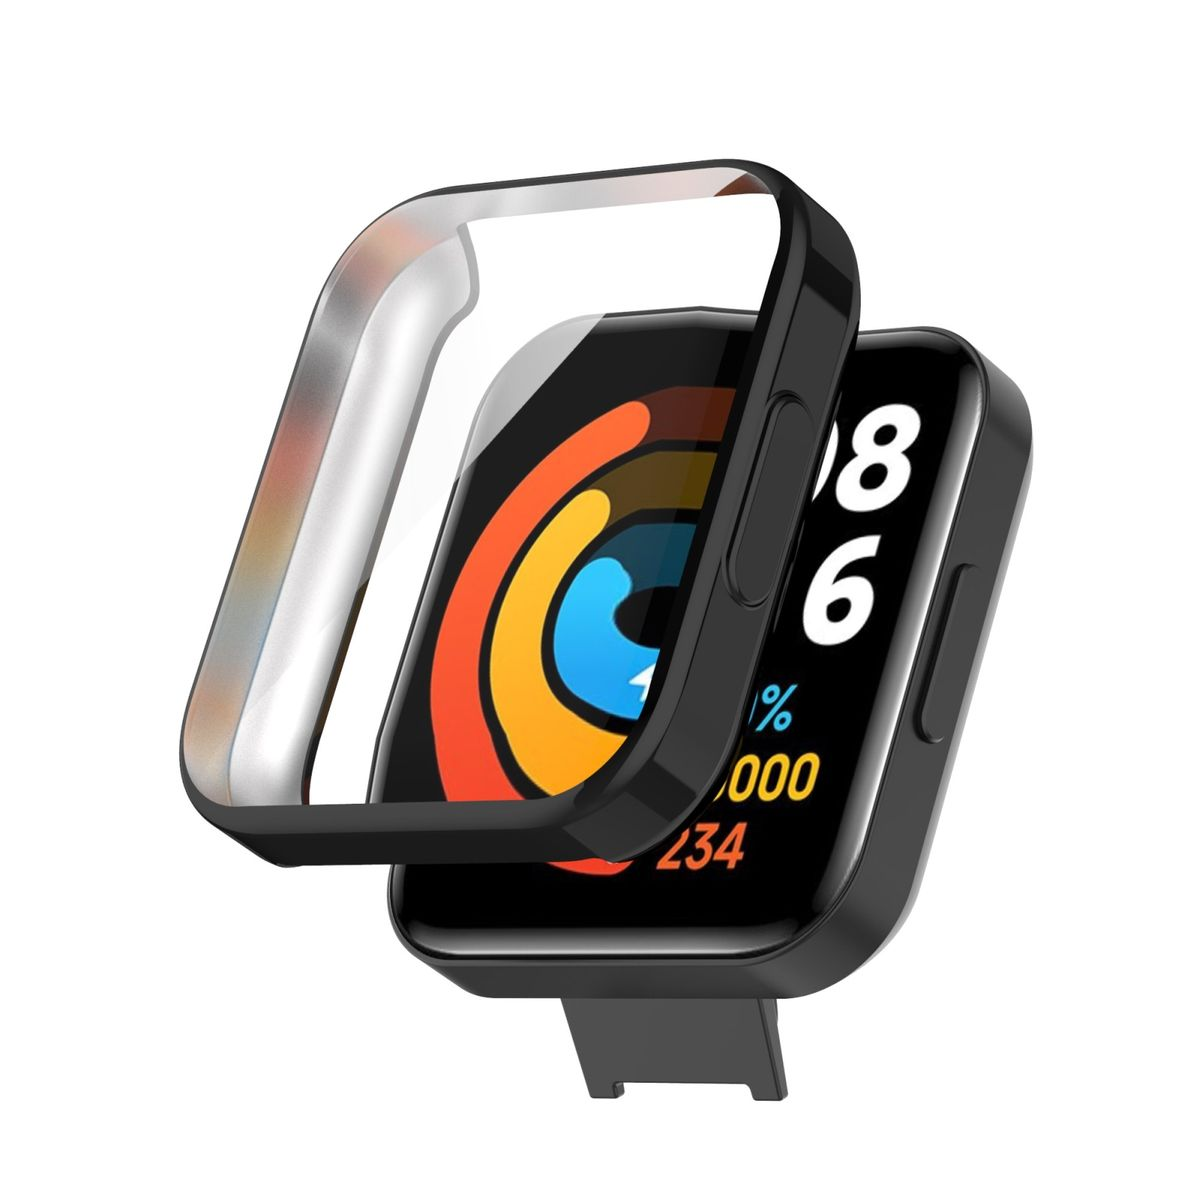 Transparent WIGENTO Grad Redmi Shockproof Watch Lite, Hülle, Cover, Silikon Xiaomi, TPU 2 Full 360